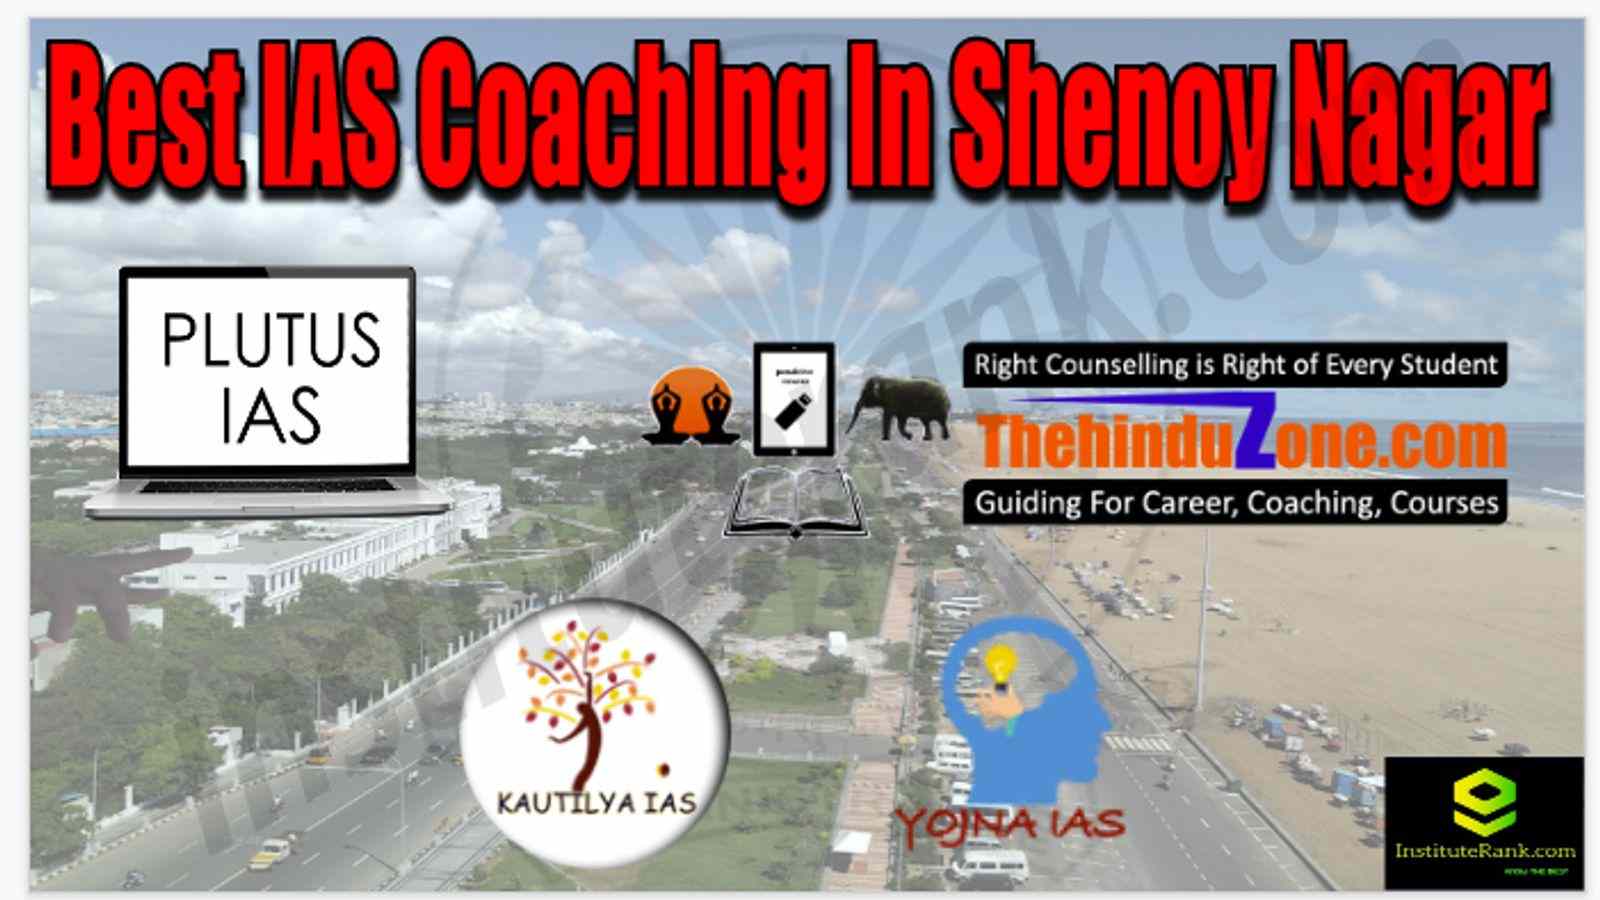 Best IAS Coaching in Shenoy Nagar